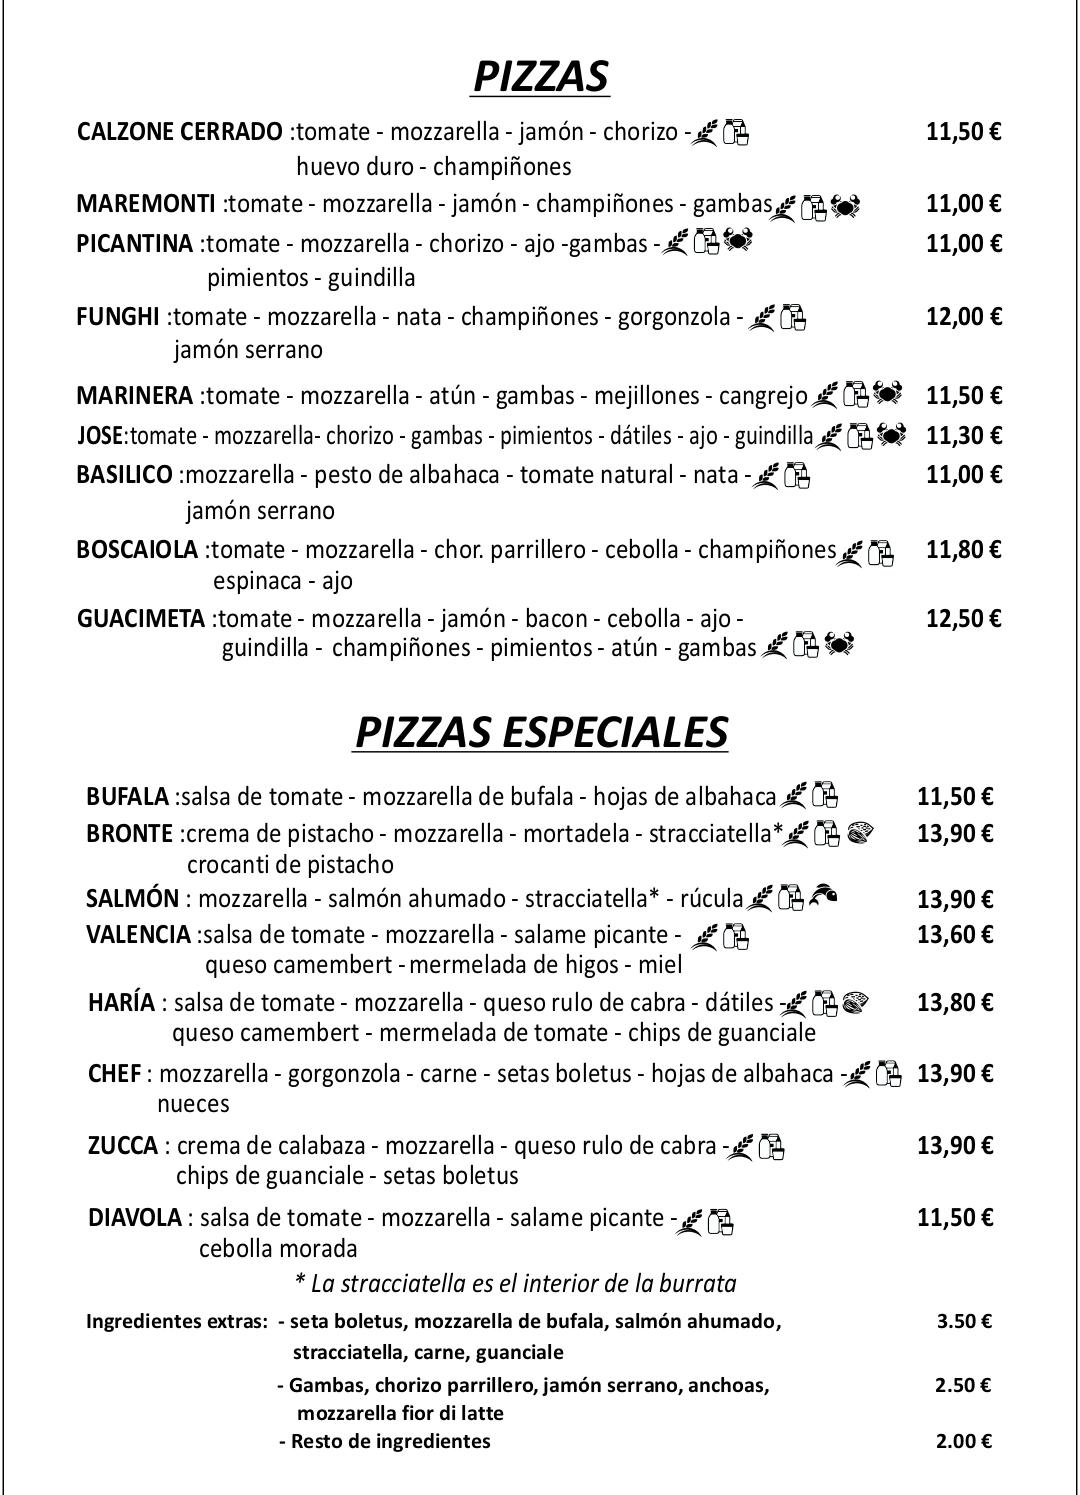 Images Guacimeta Pizza